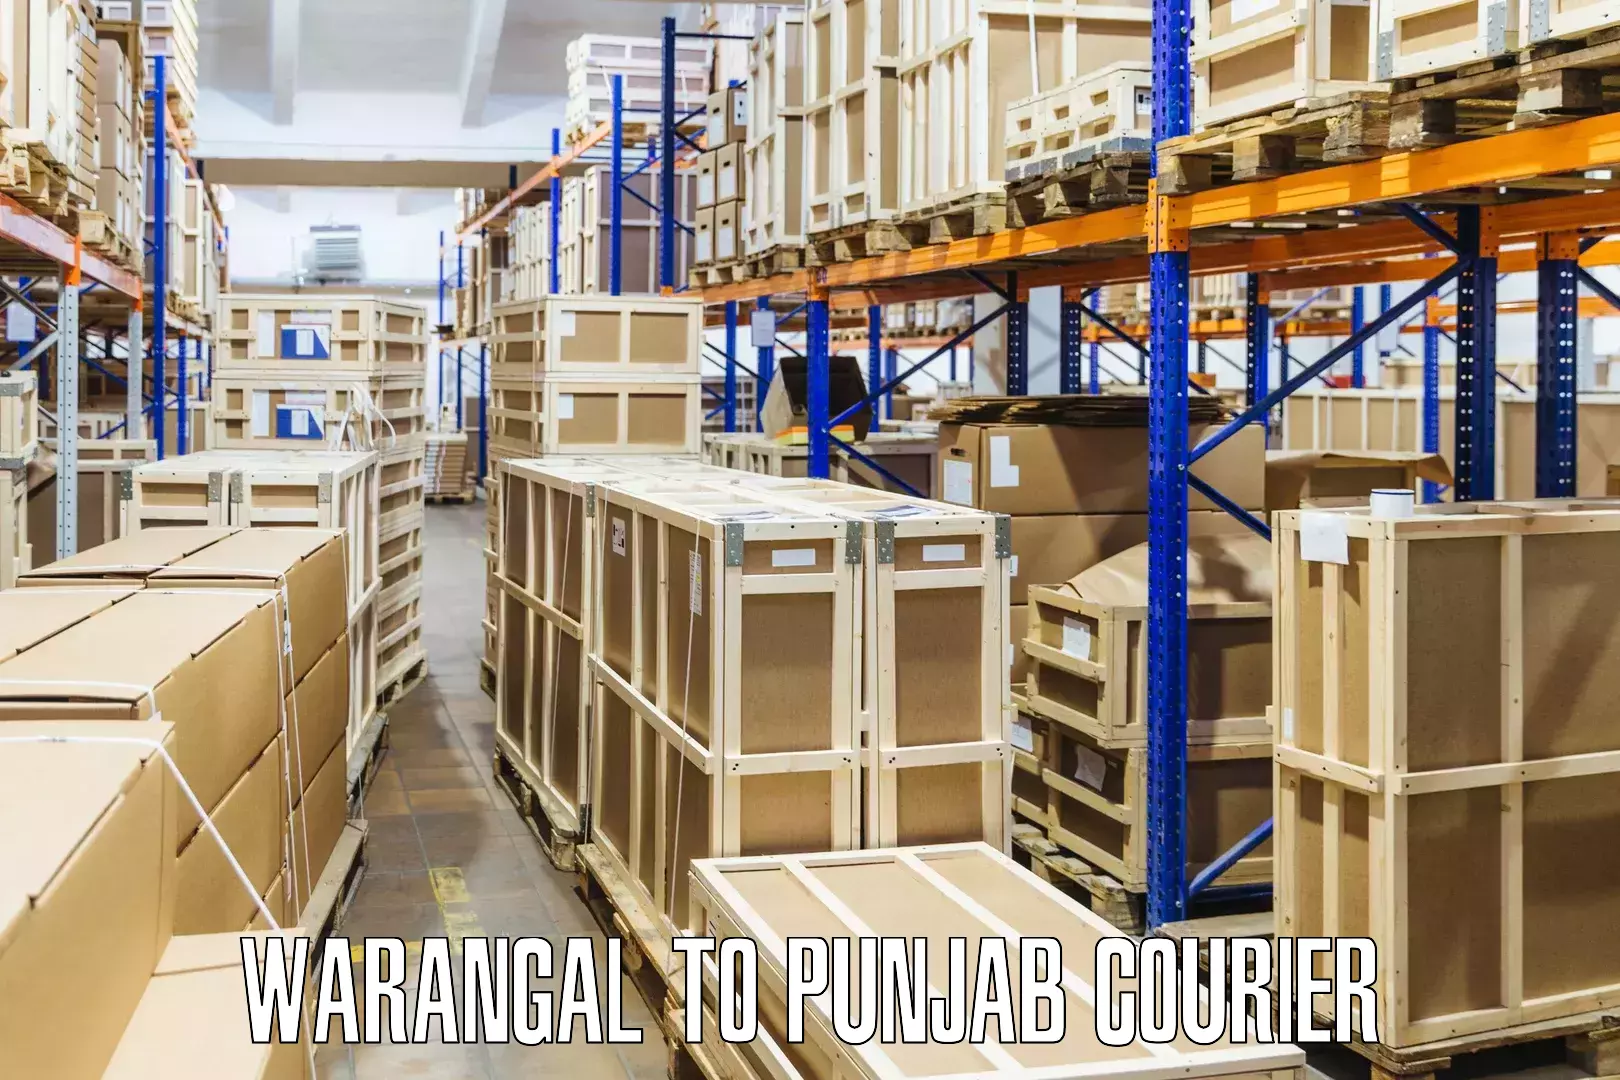 Express delivery capabilities Warangal to Nangal